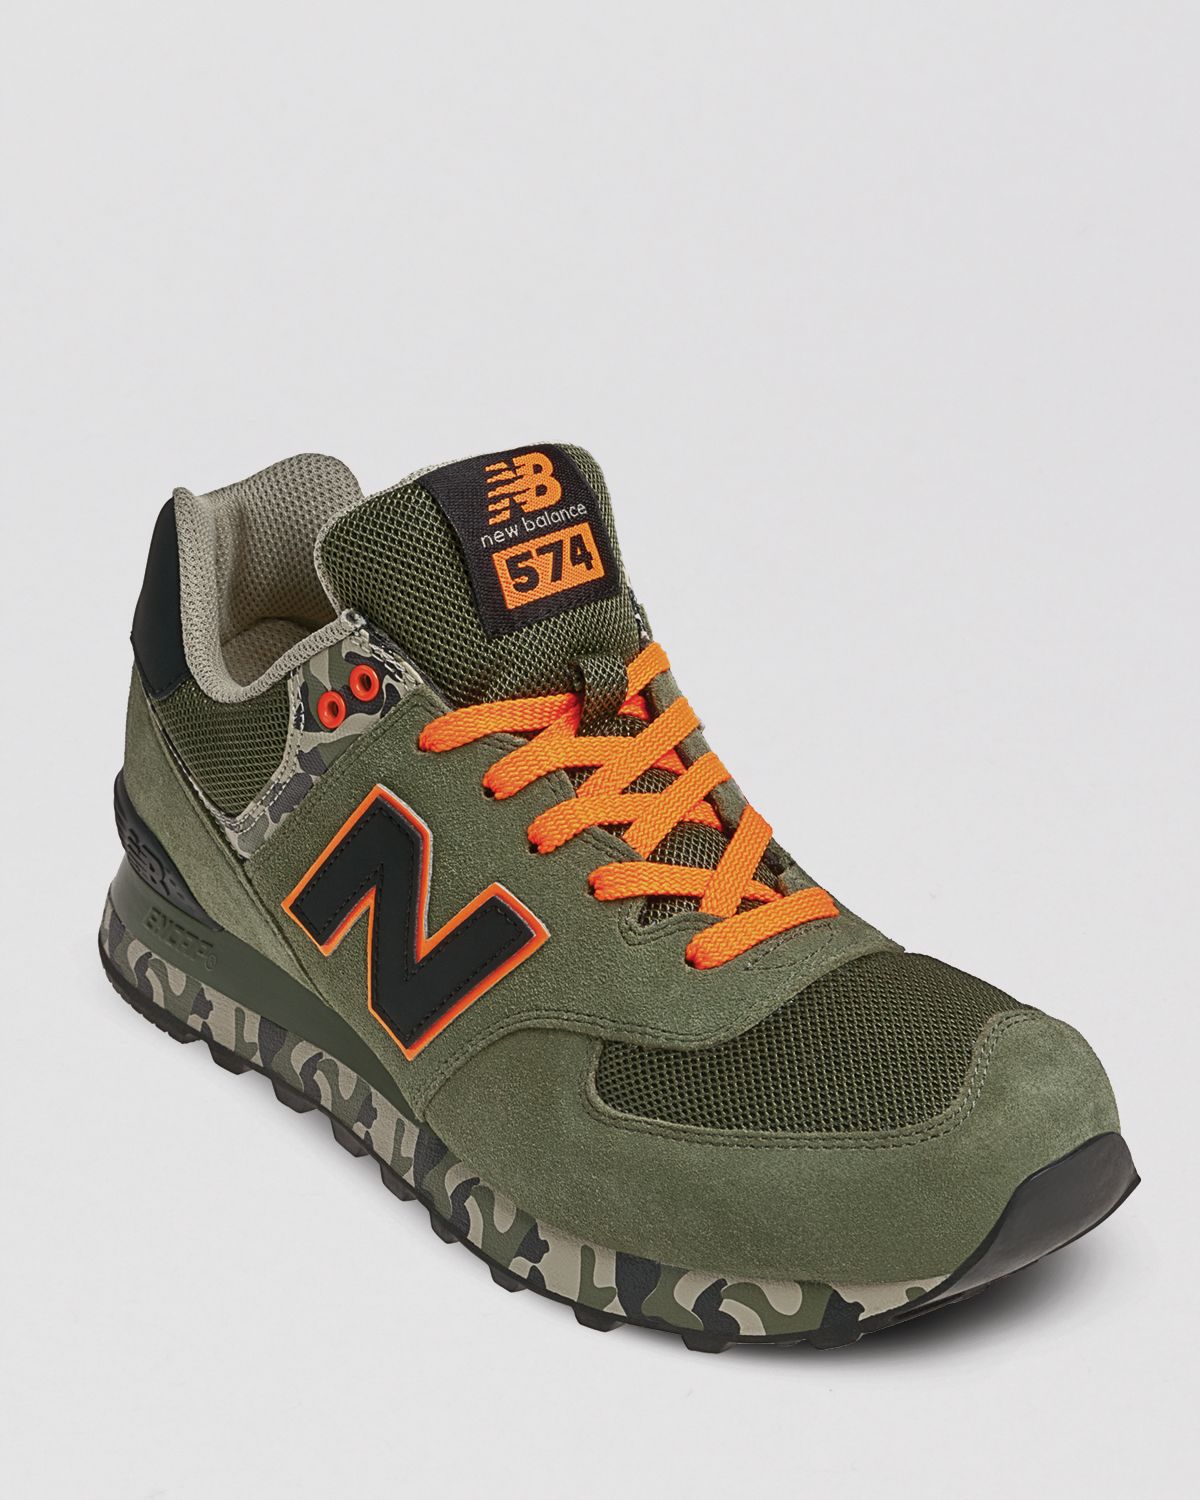 New Balance 574 Camo Sneakers in Green 